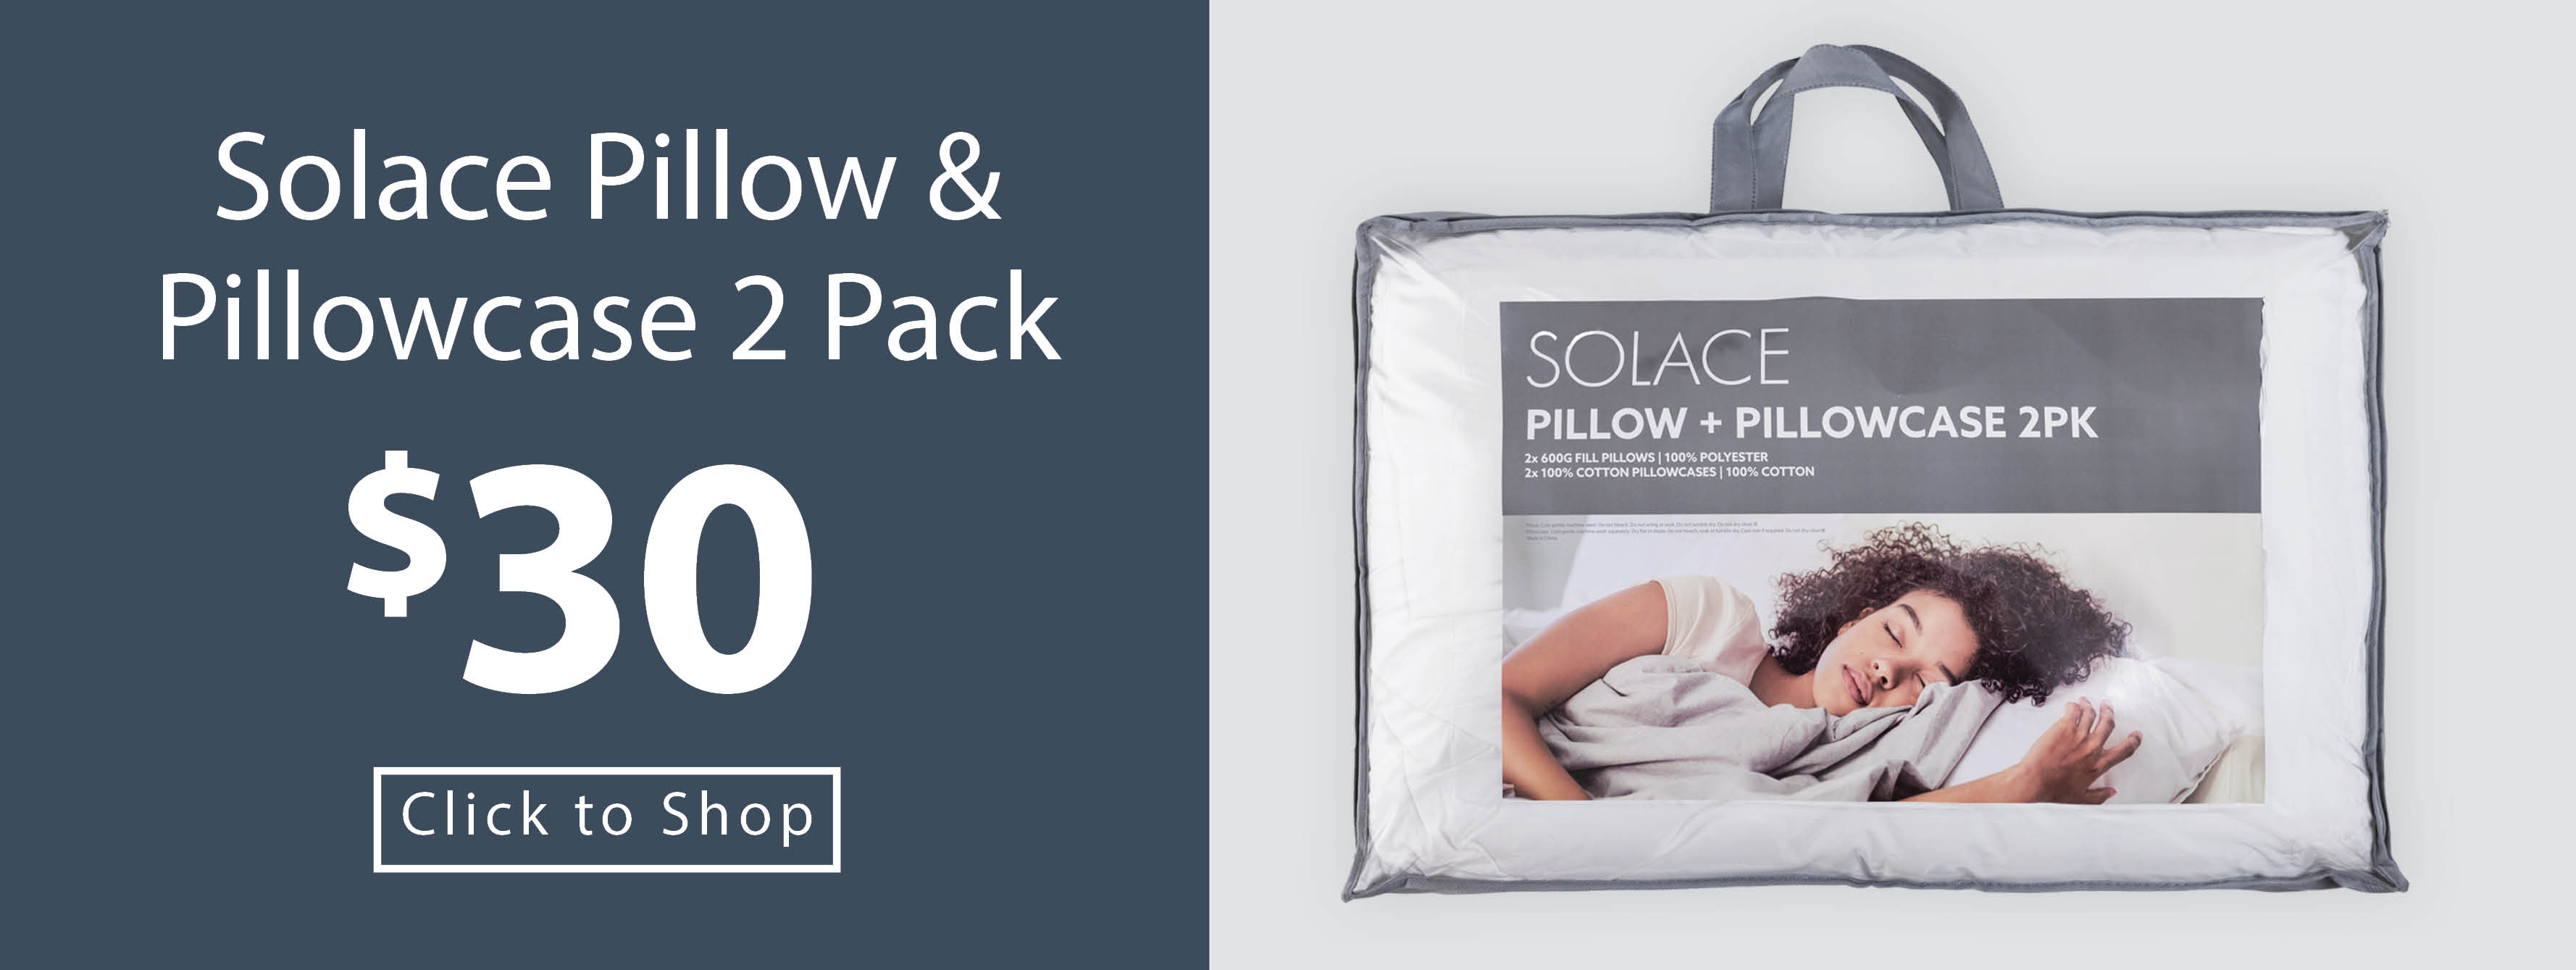 Solace 2 pk pillow